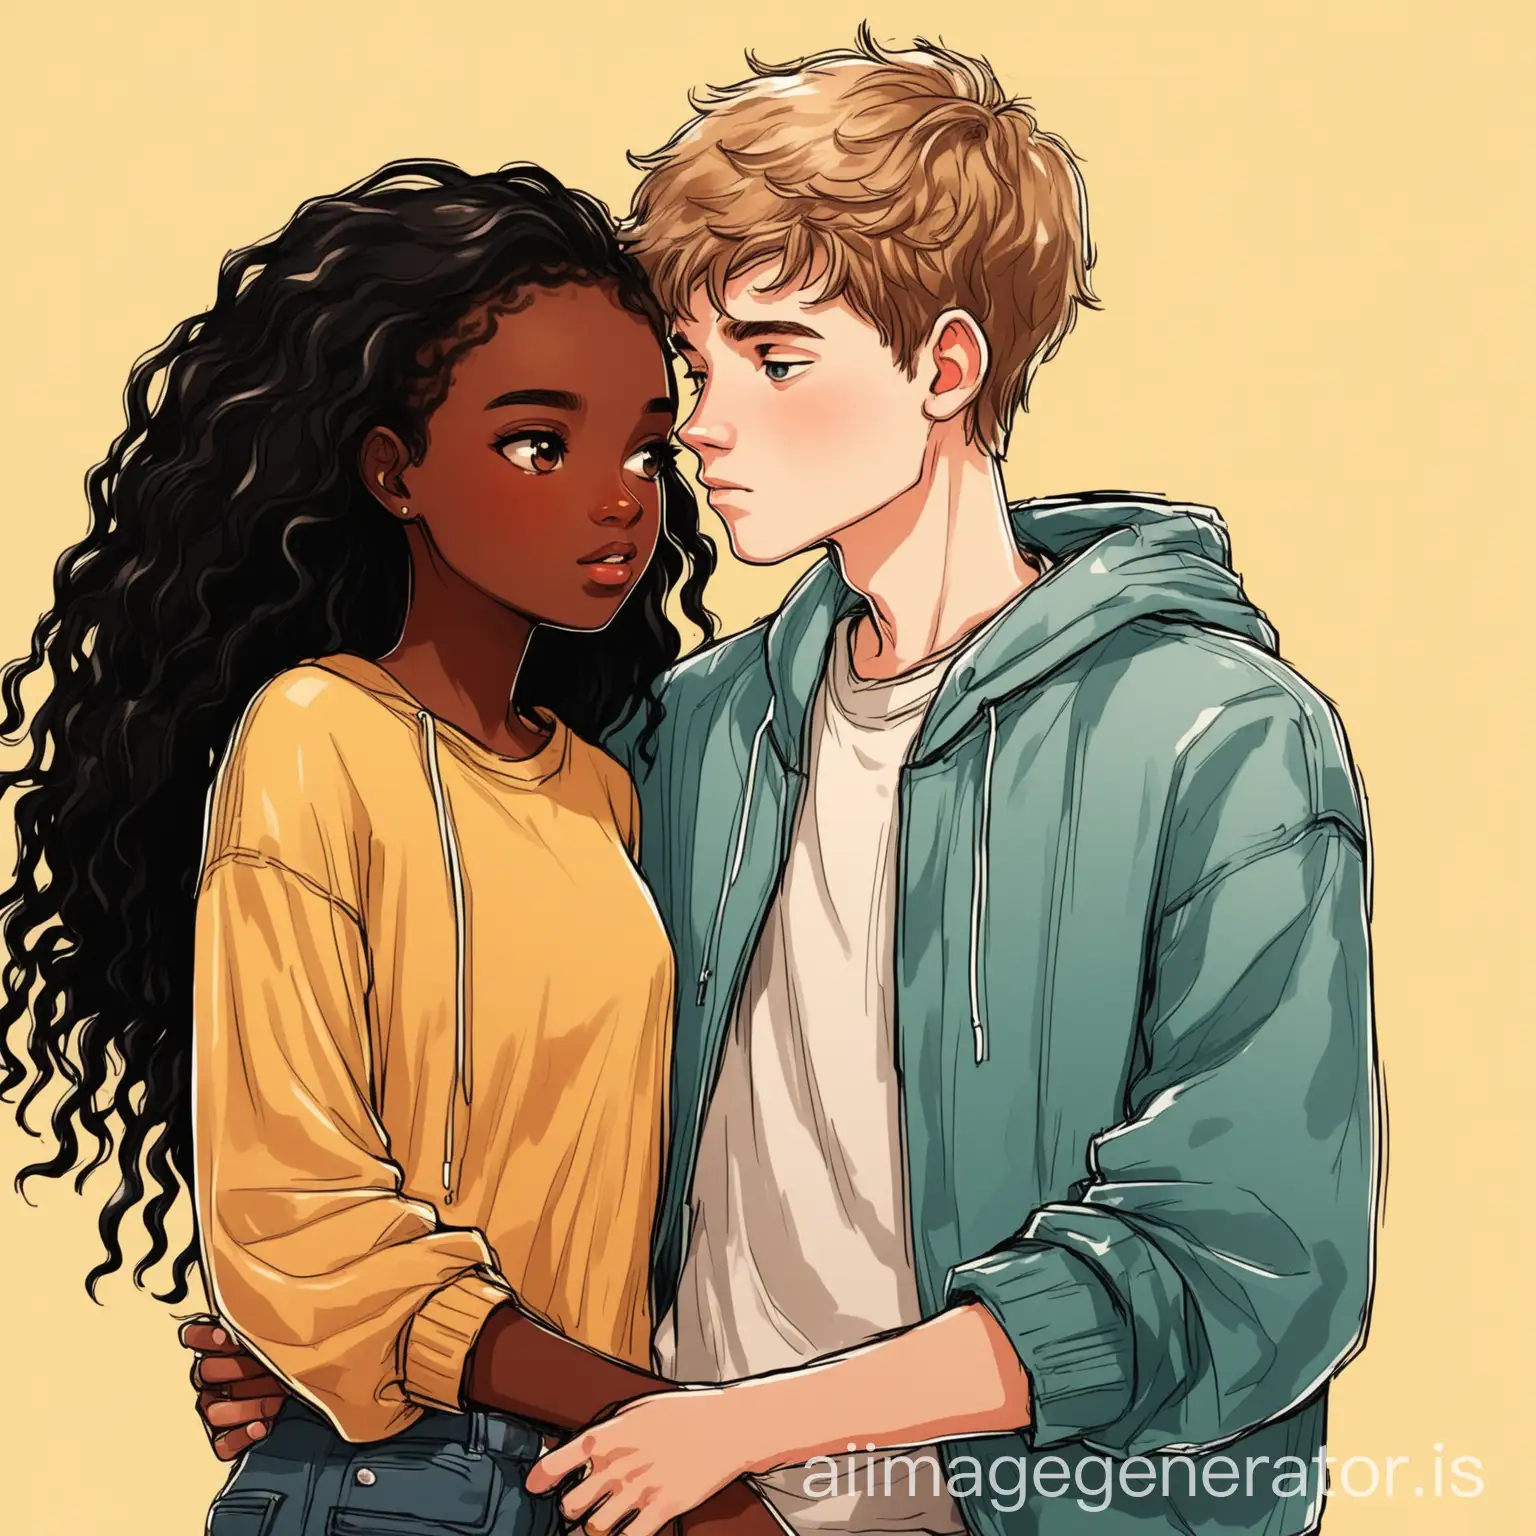 Teenage-Interracial-Couple-Illustration-Black-Girl-and-White-Boy-Embracing